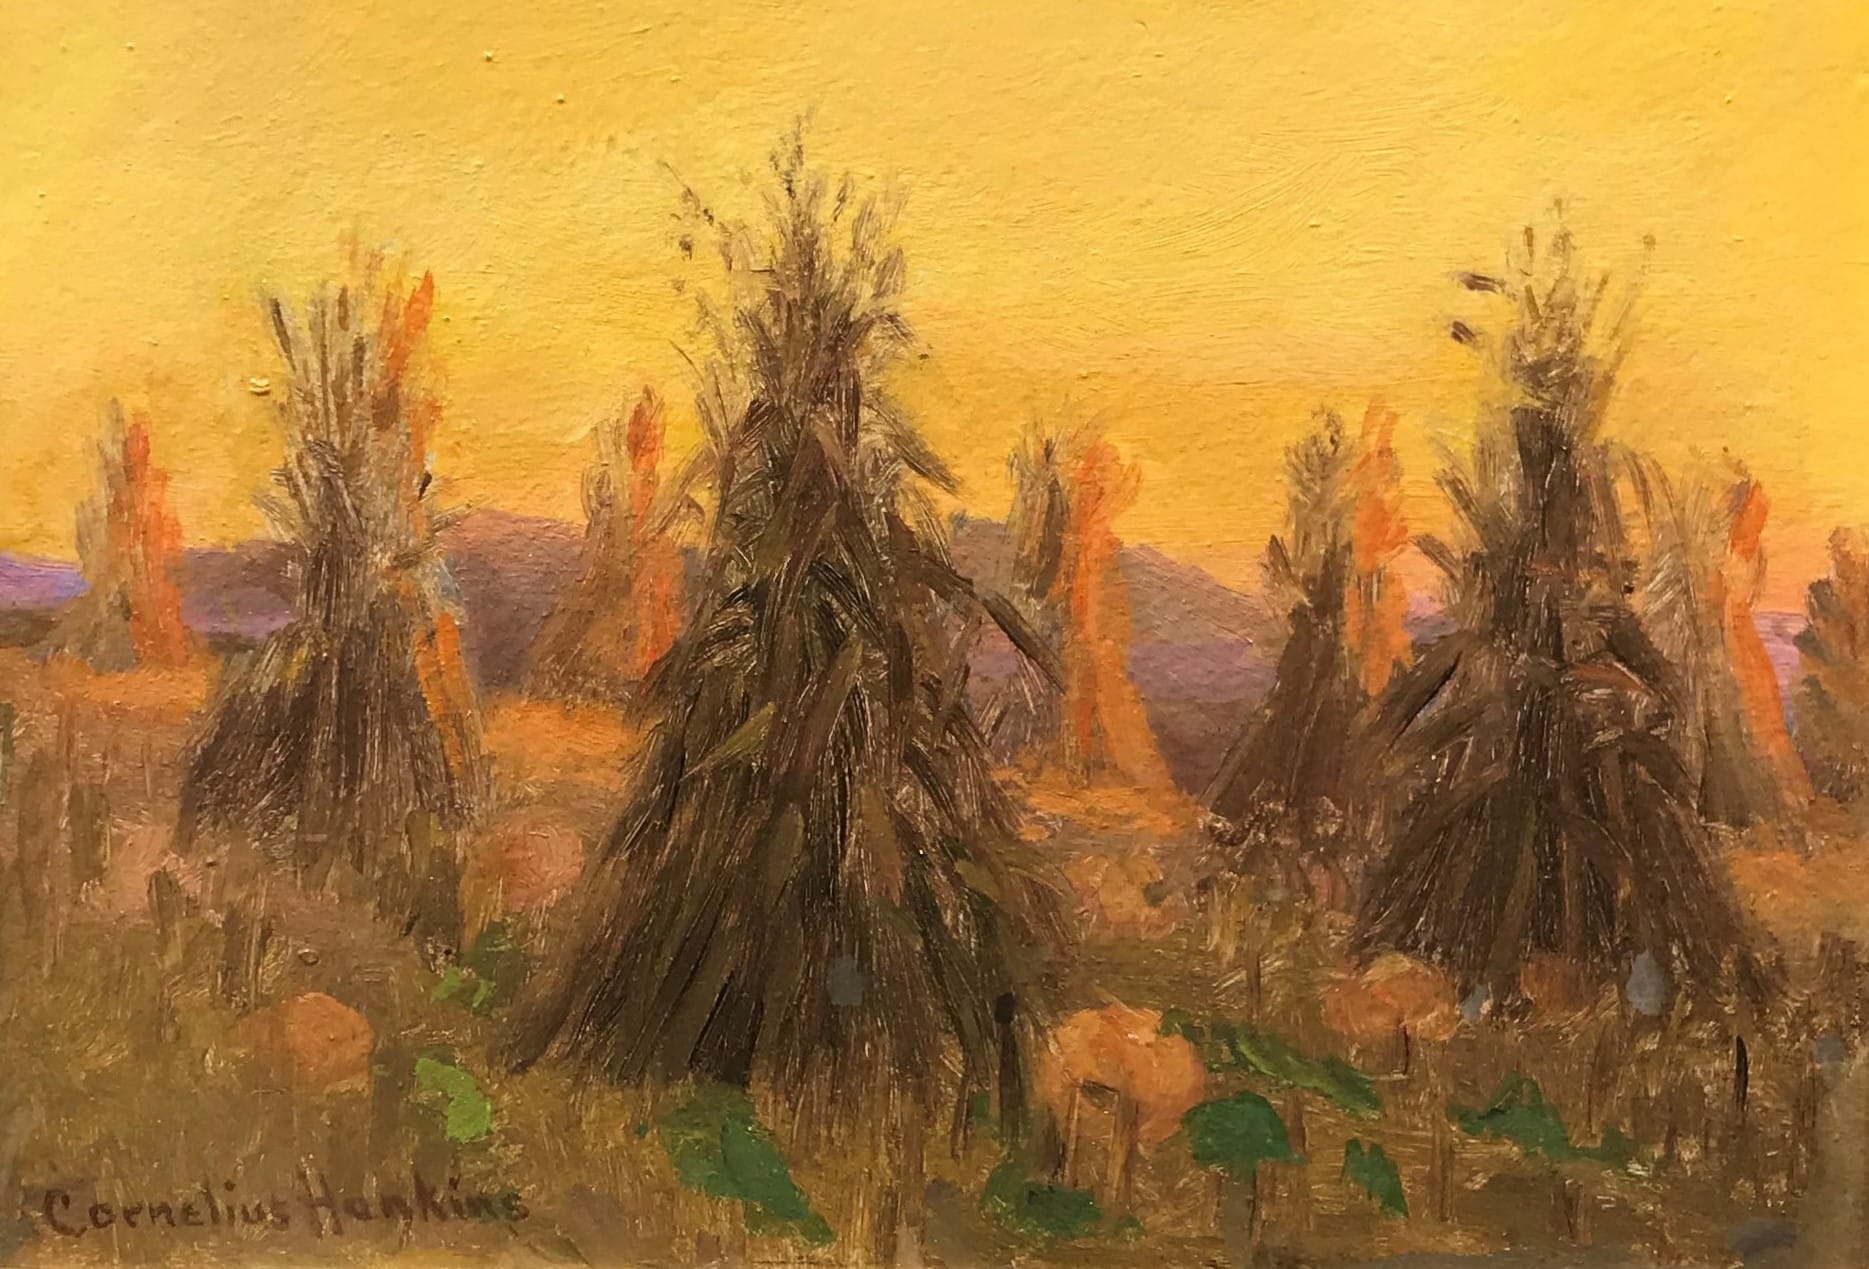 Cornelius Hankins's Landscape with Haystacks. Tennessee landscape with haystacks before a yellow sky